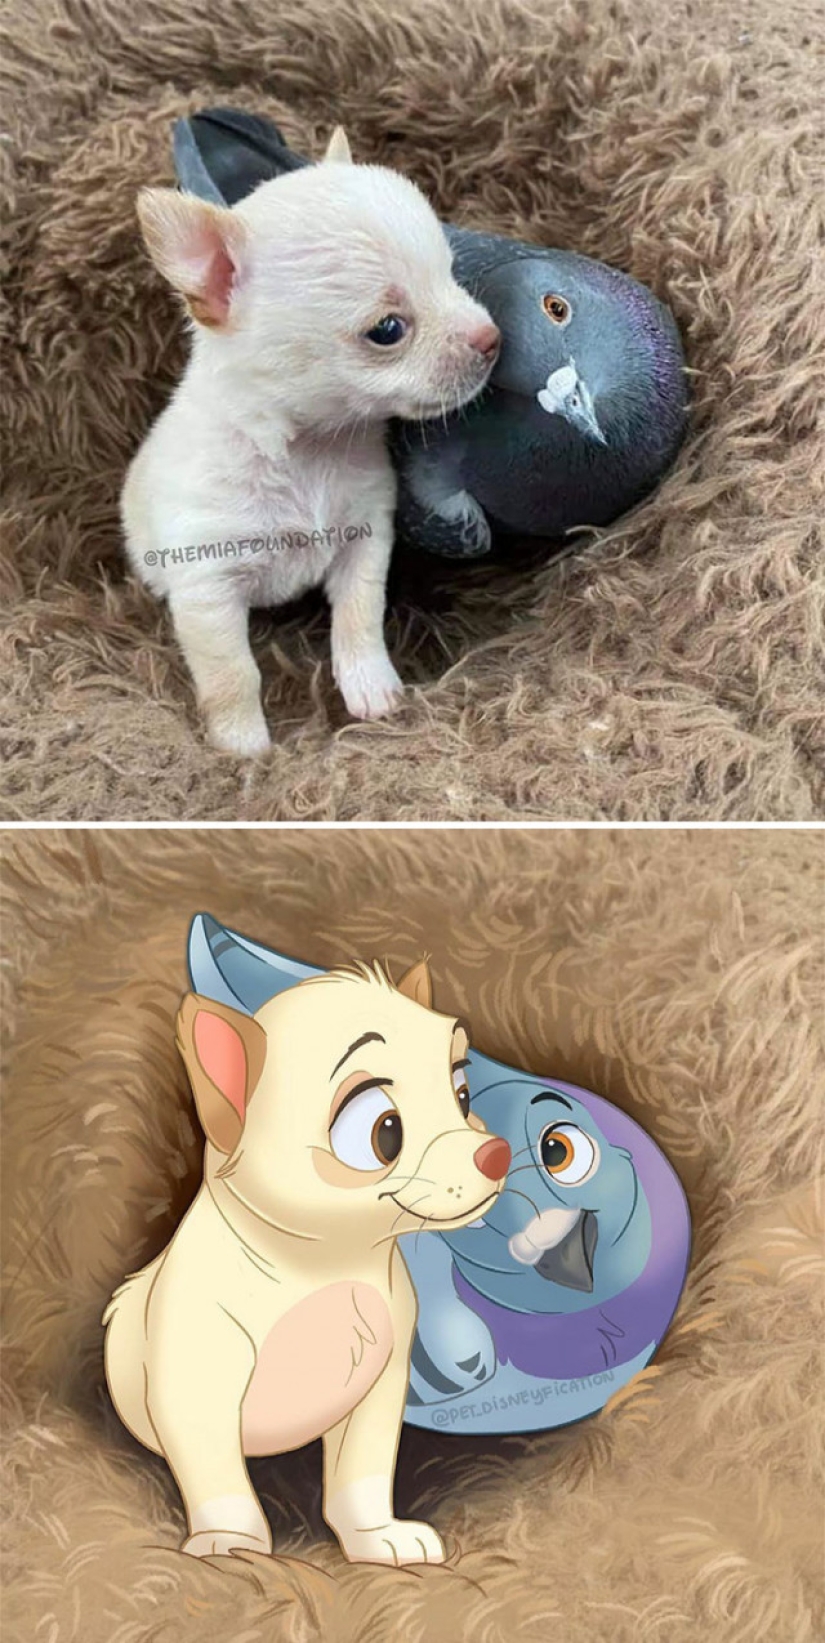 Dutch artist turns animals into Disney characters